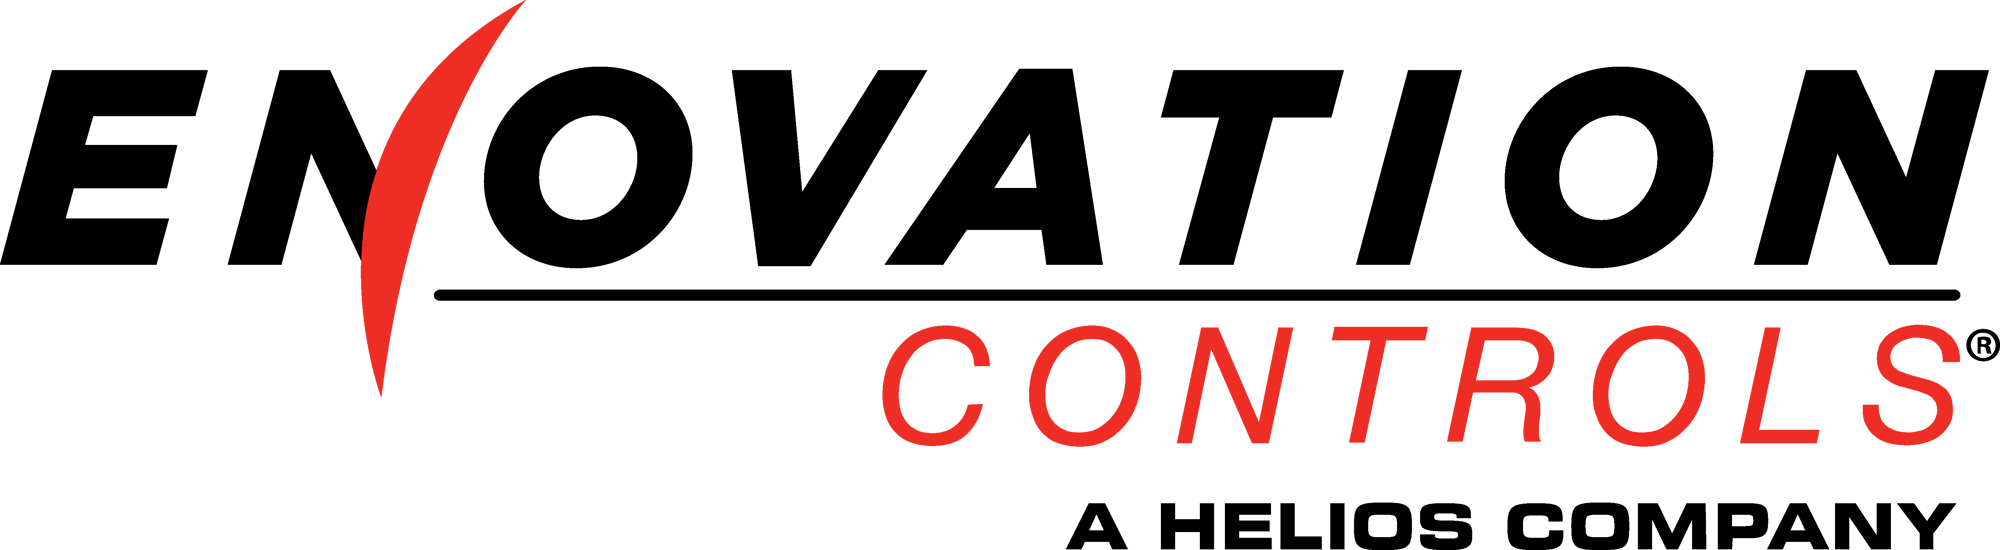 Enovation Controls Logo - color